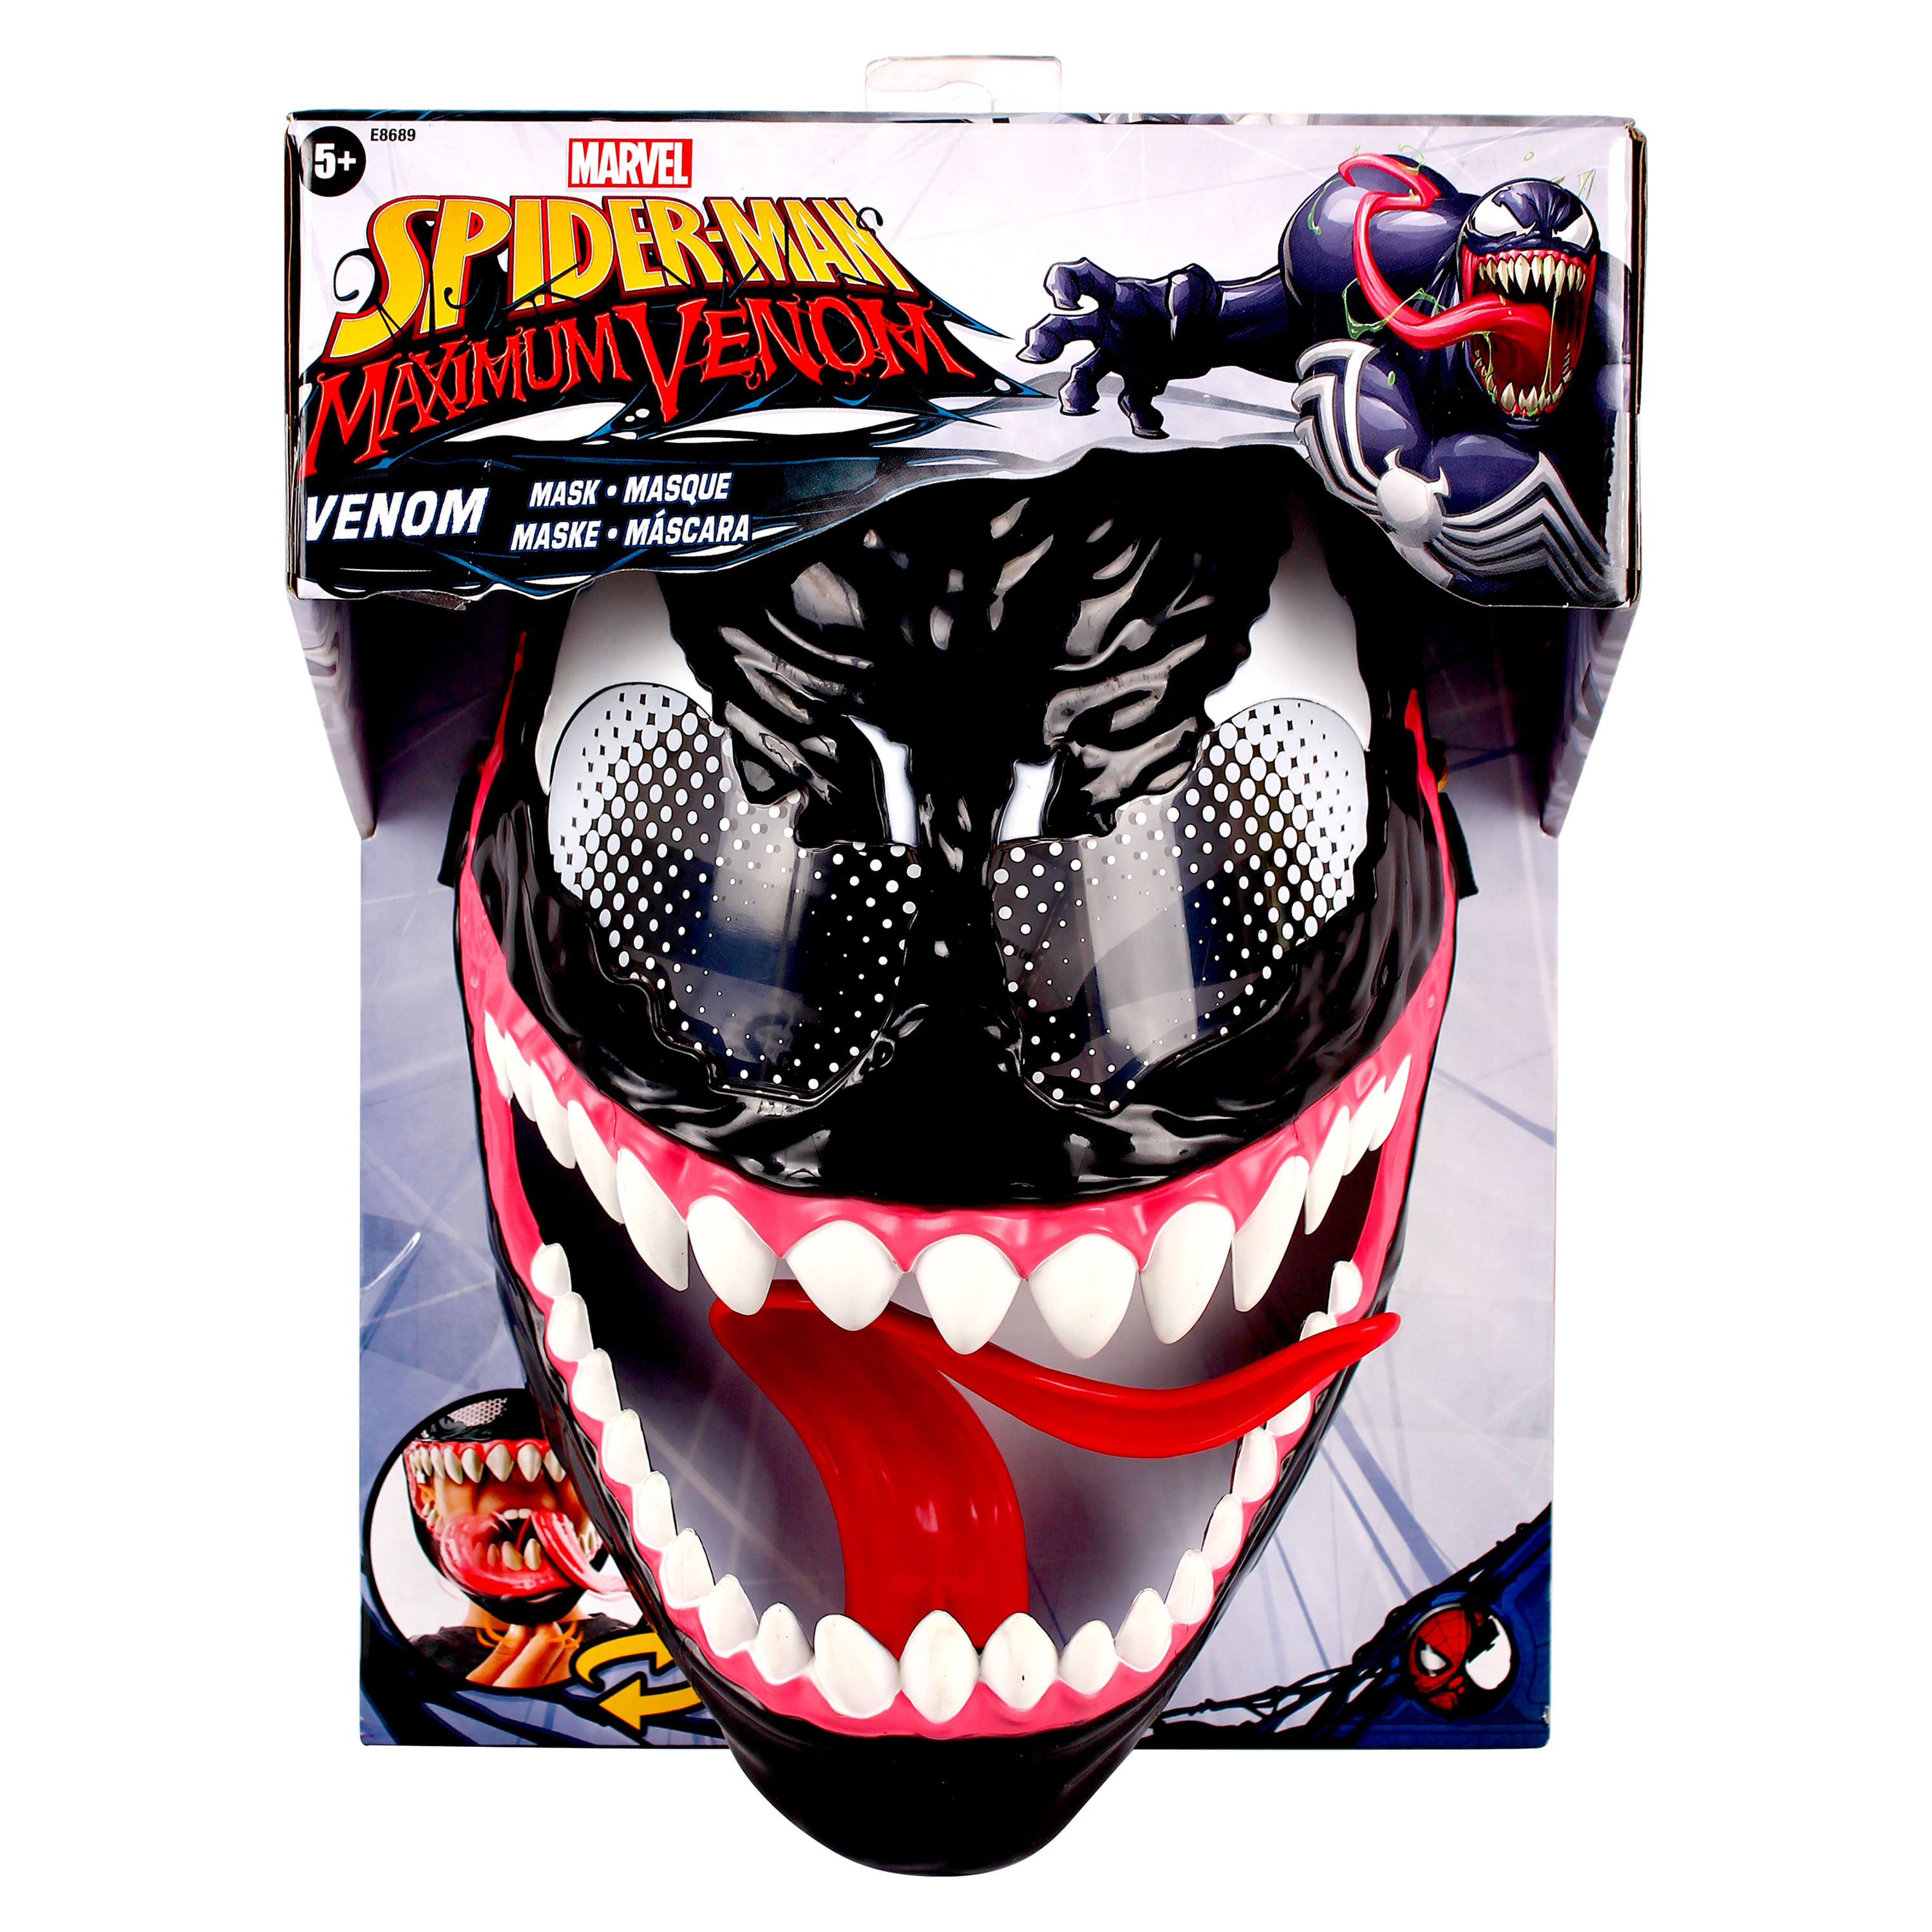 Comprar Spiderman Mascara De Maximum Venom | Walmart El Salvador